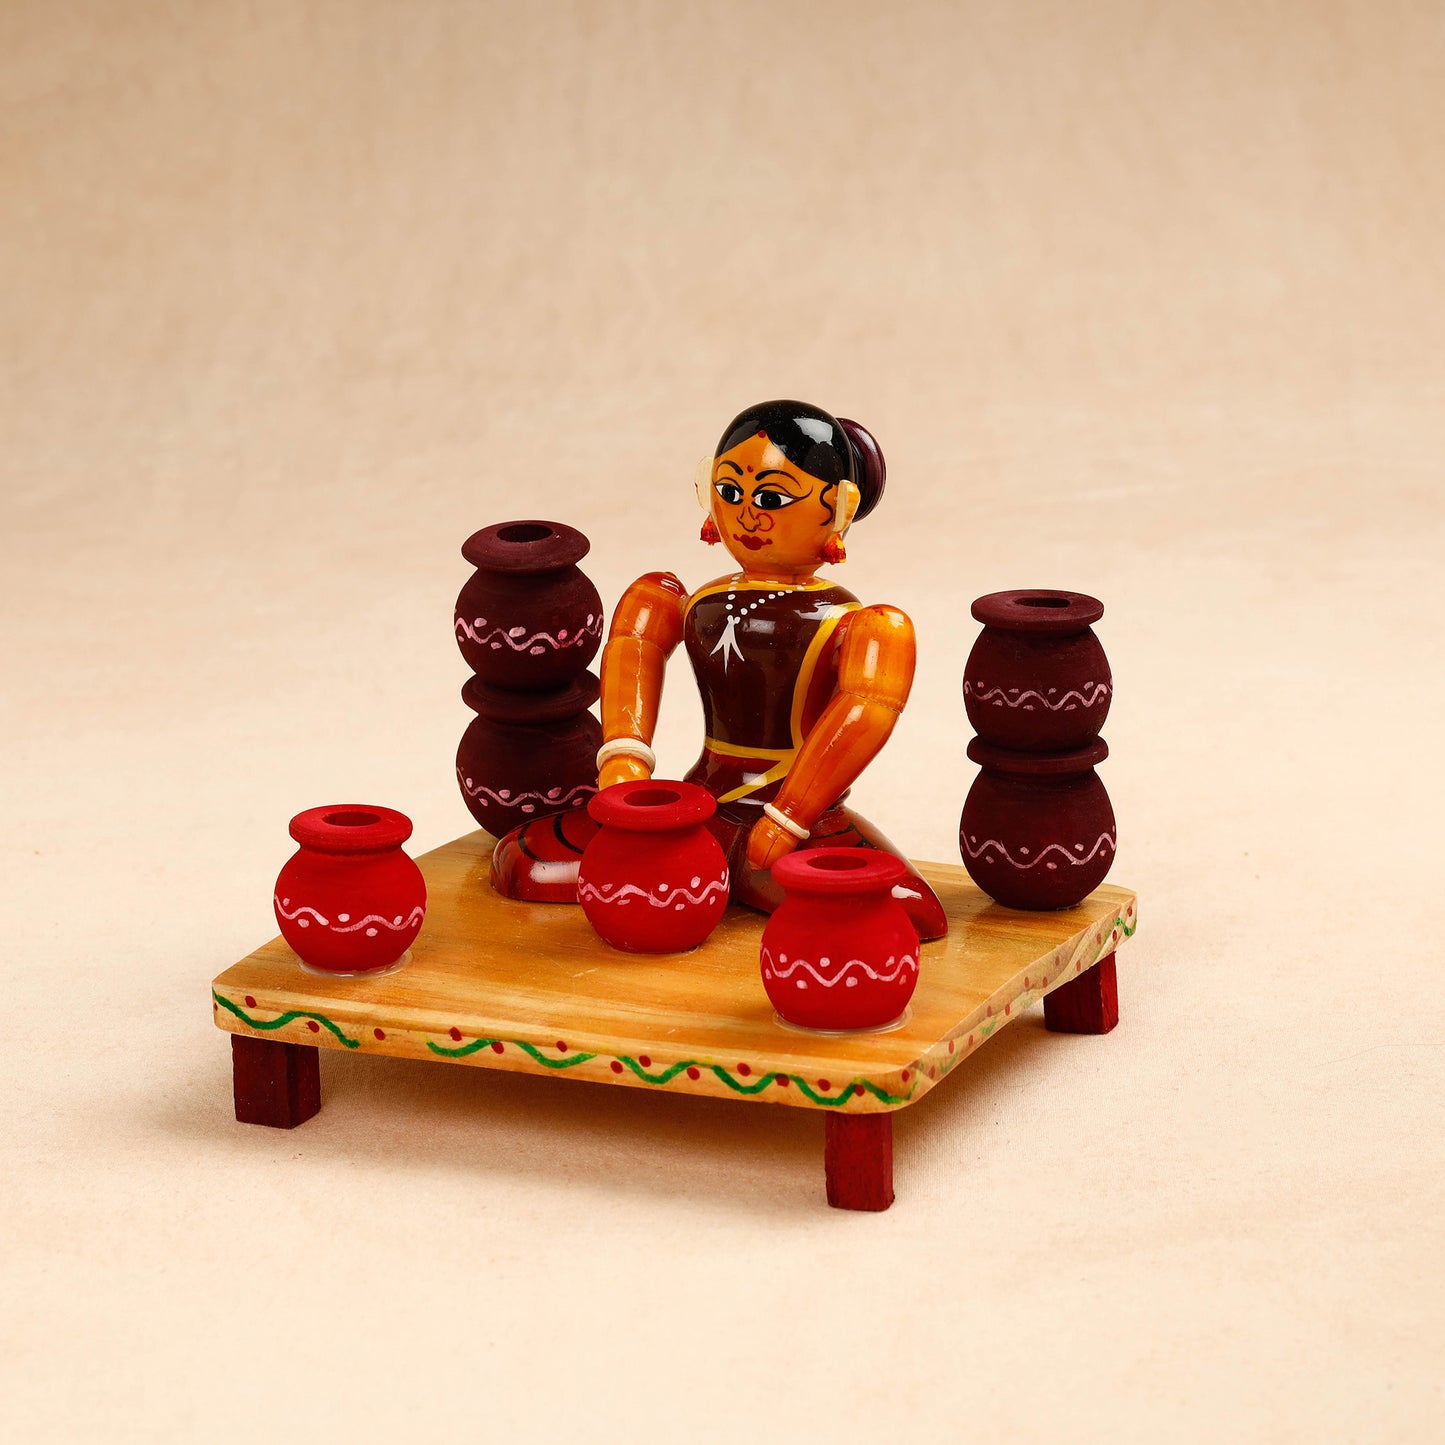 Pots Selling Women - Etikoppaka Handcrafted Wooden Decor Item